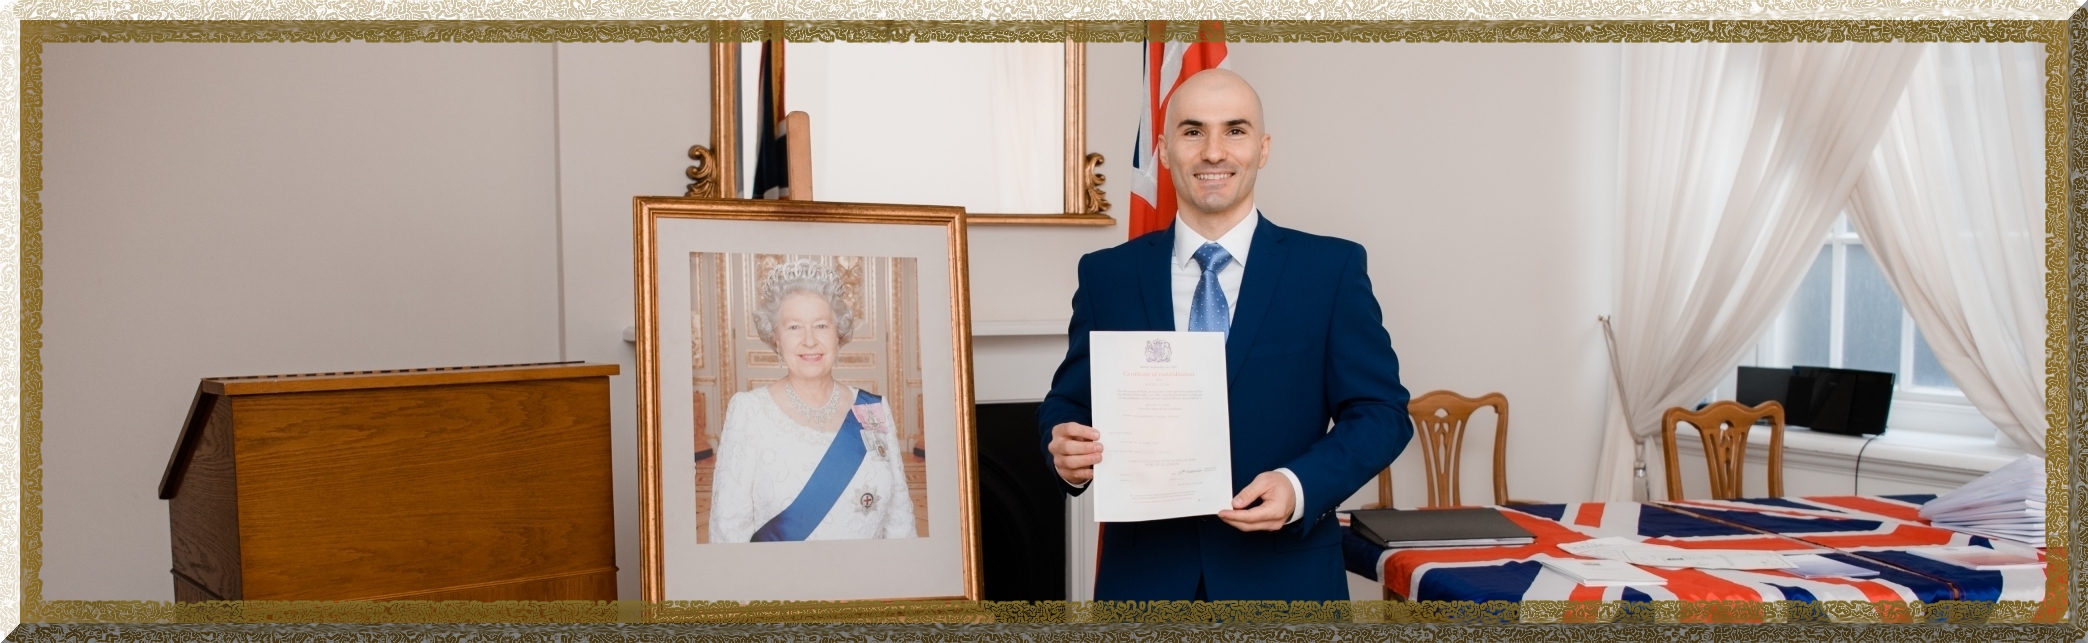 Dr Stefan Kolimechkov has gained his British Citizenship